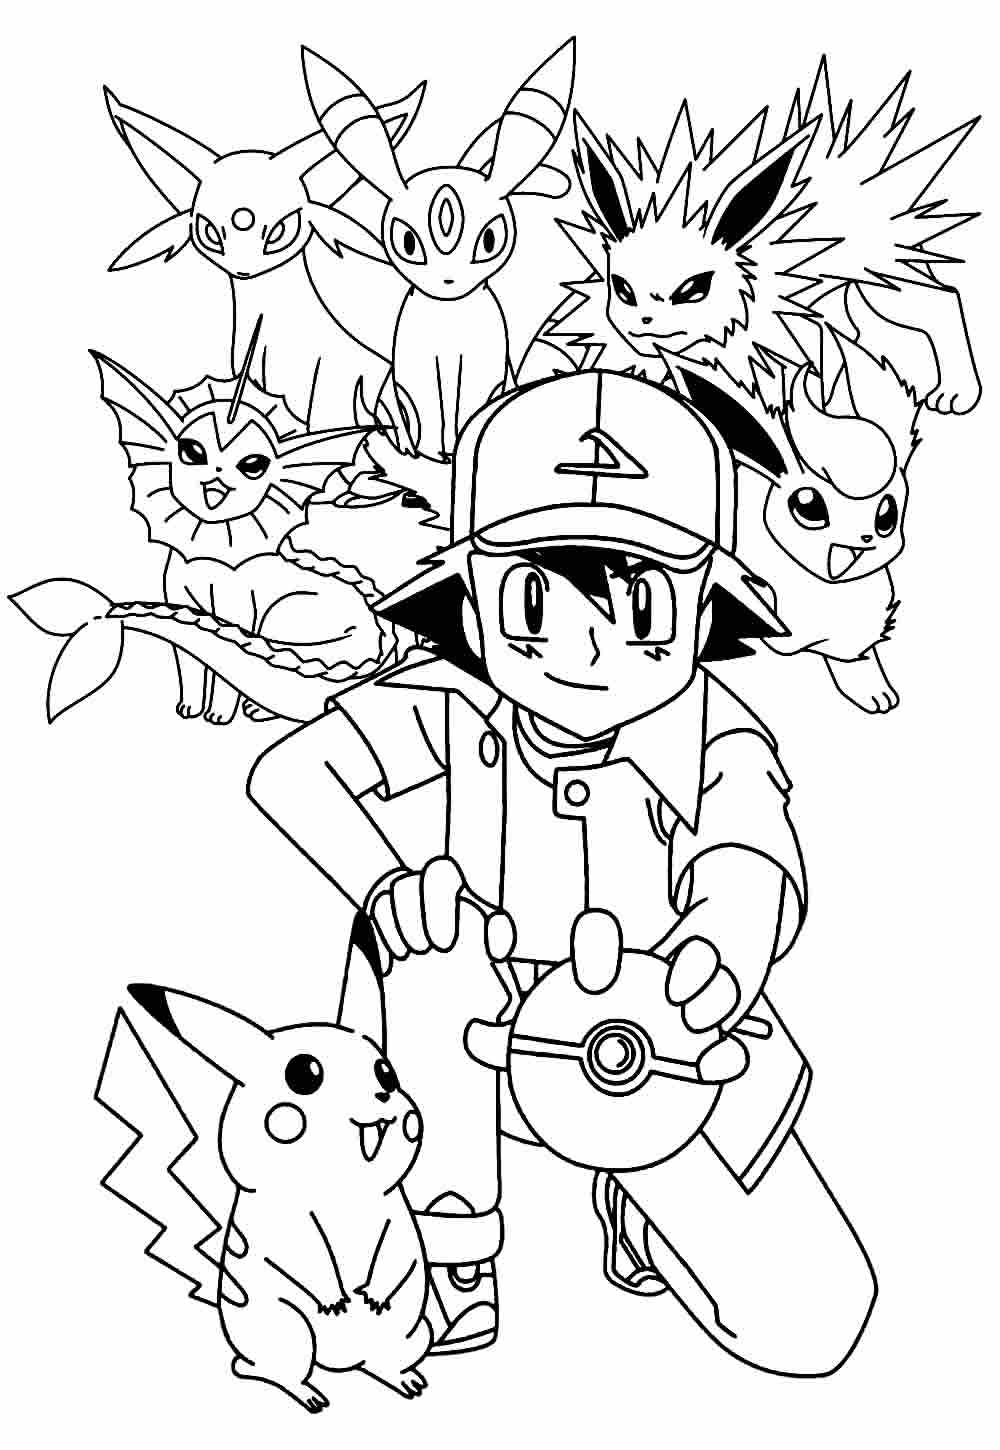 Desenho para colorir - Pokémons - Ash - Pikachu